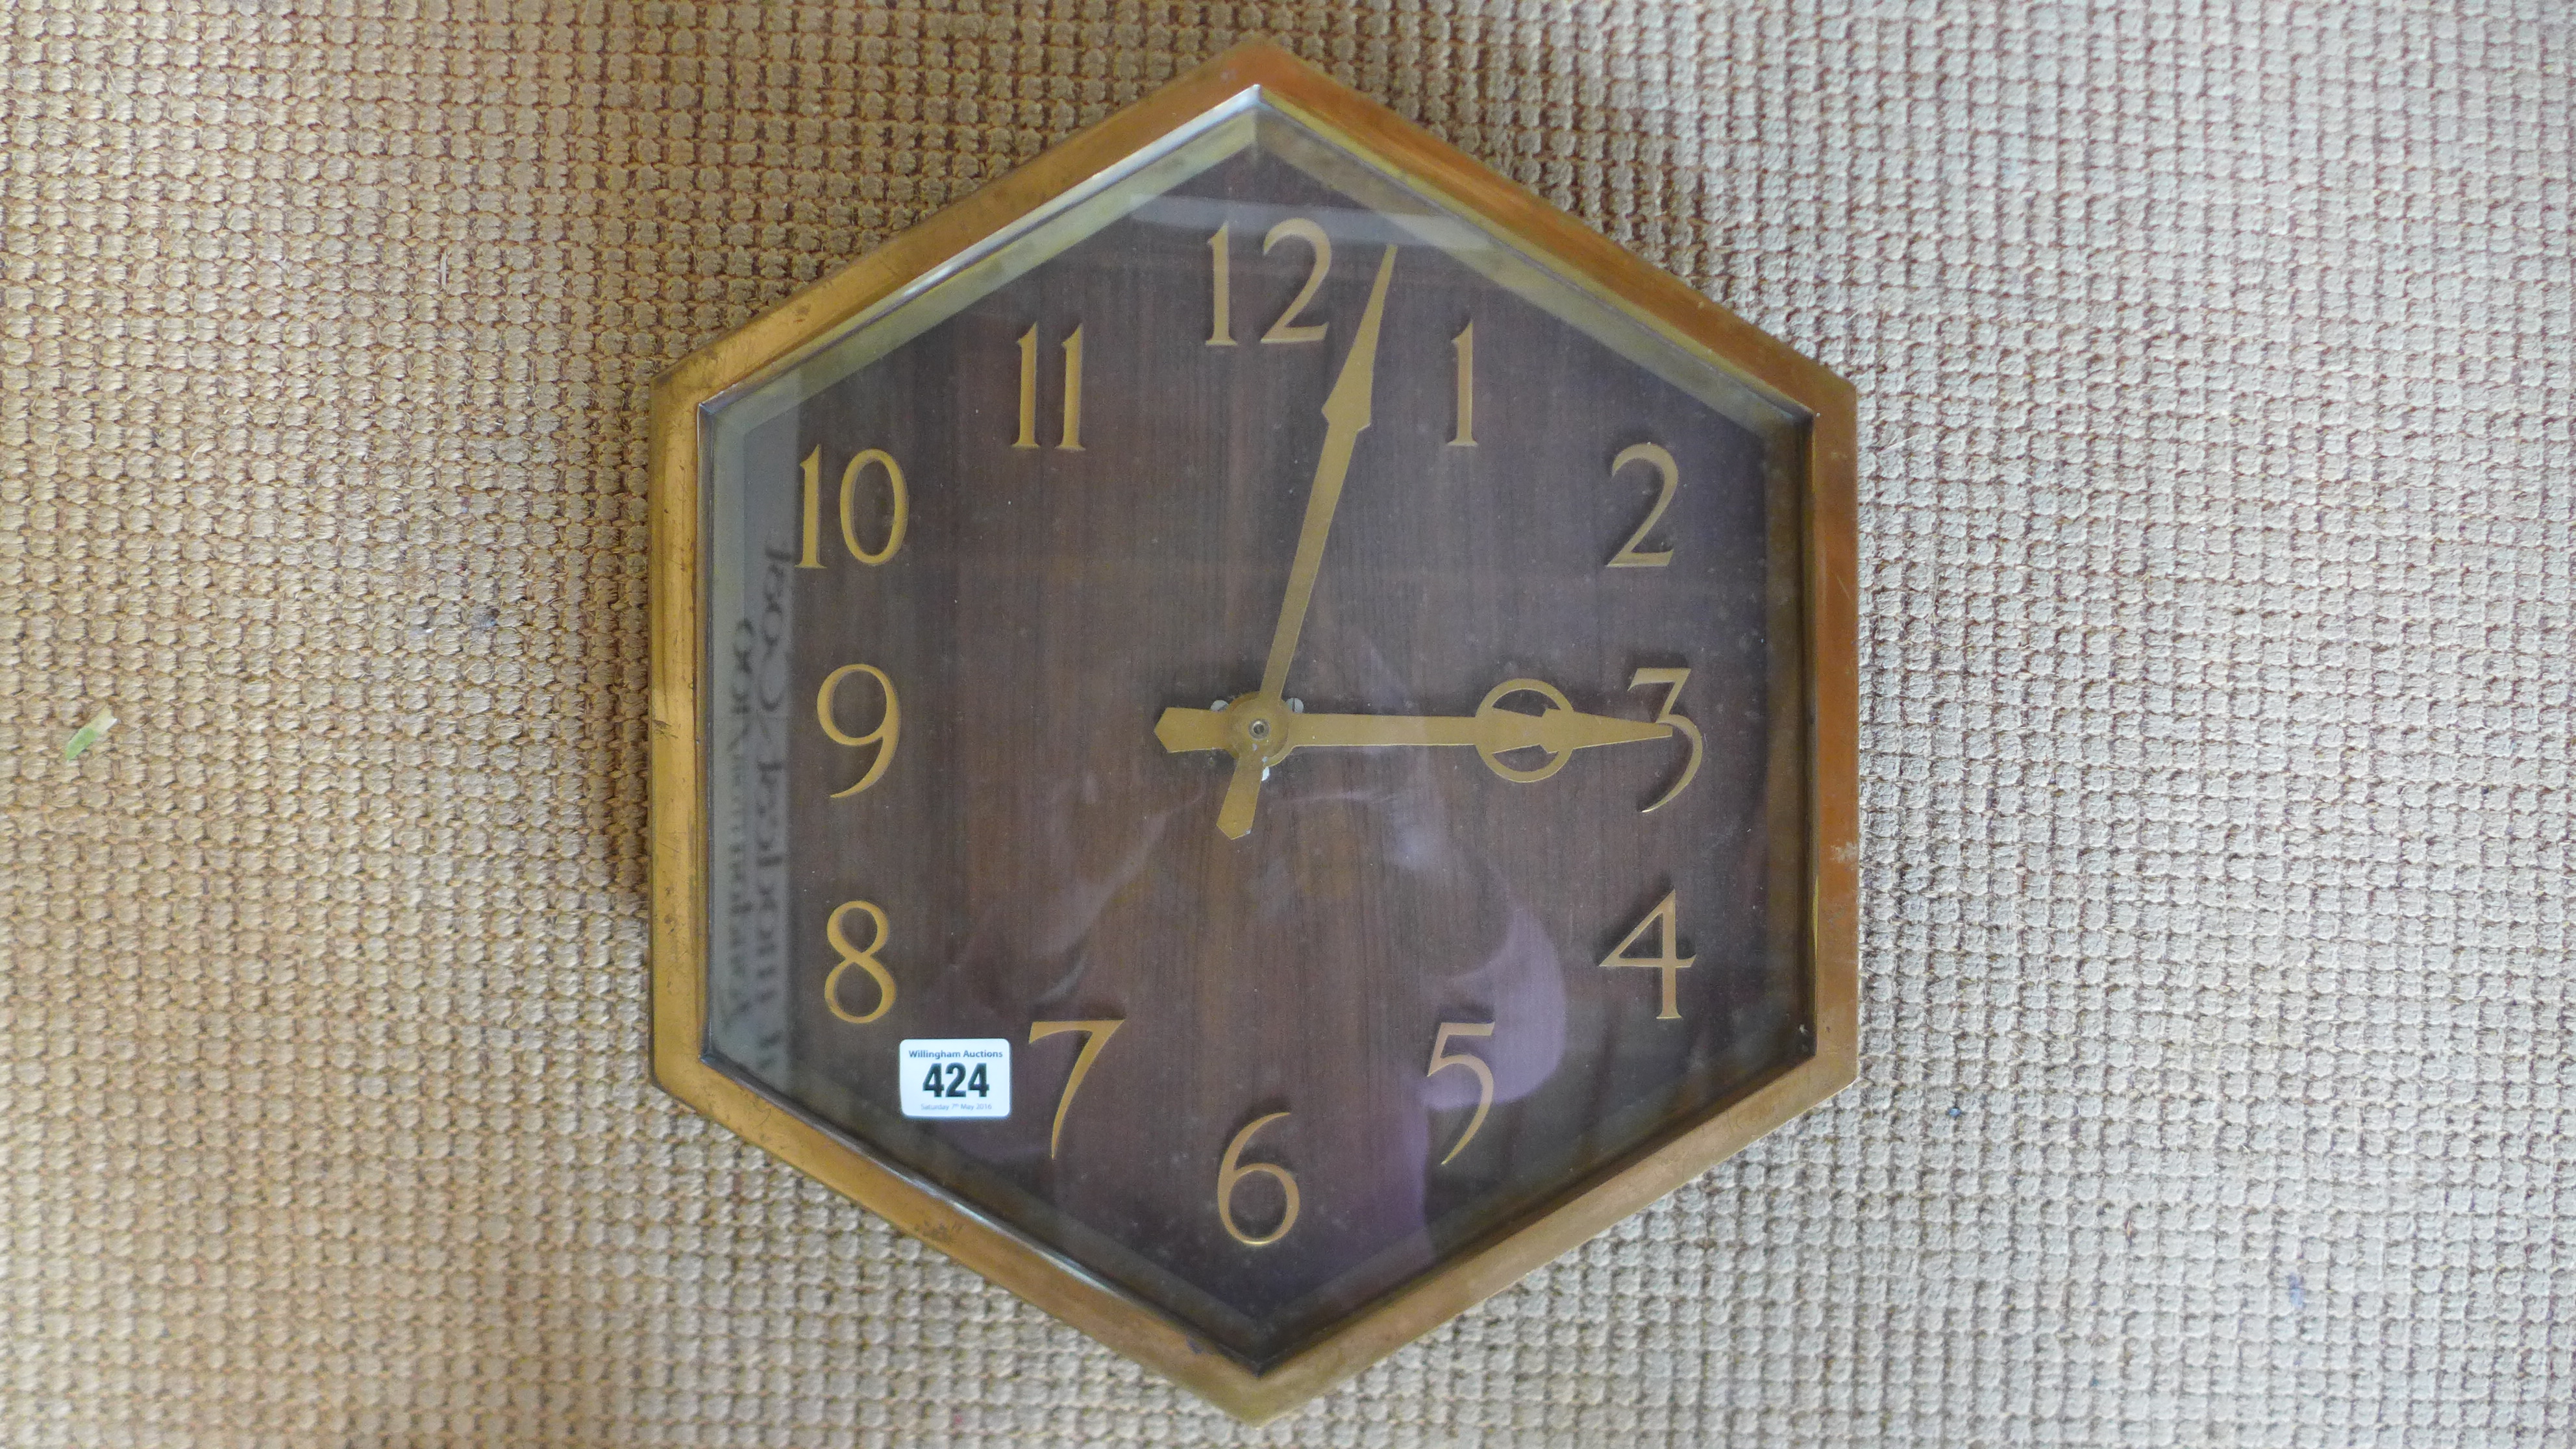 A brass hexagonal dial slave wall clock with a wooden dial - 42cm x 36cm